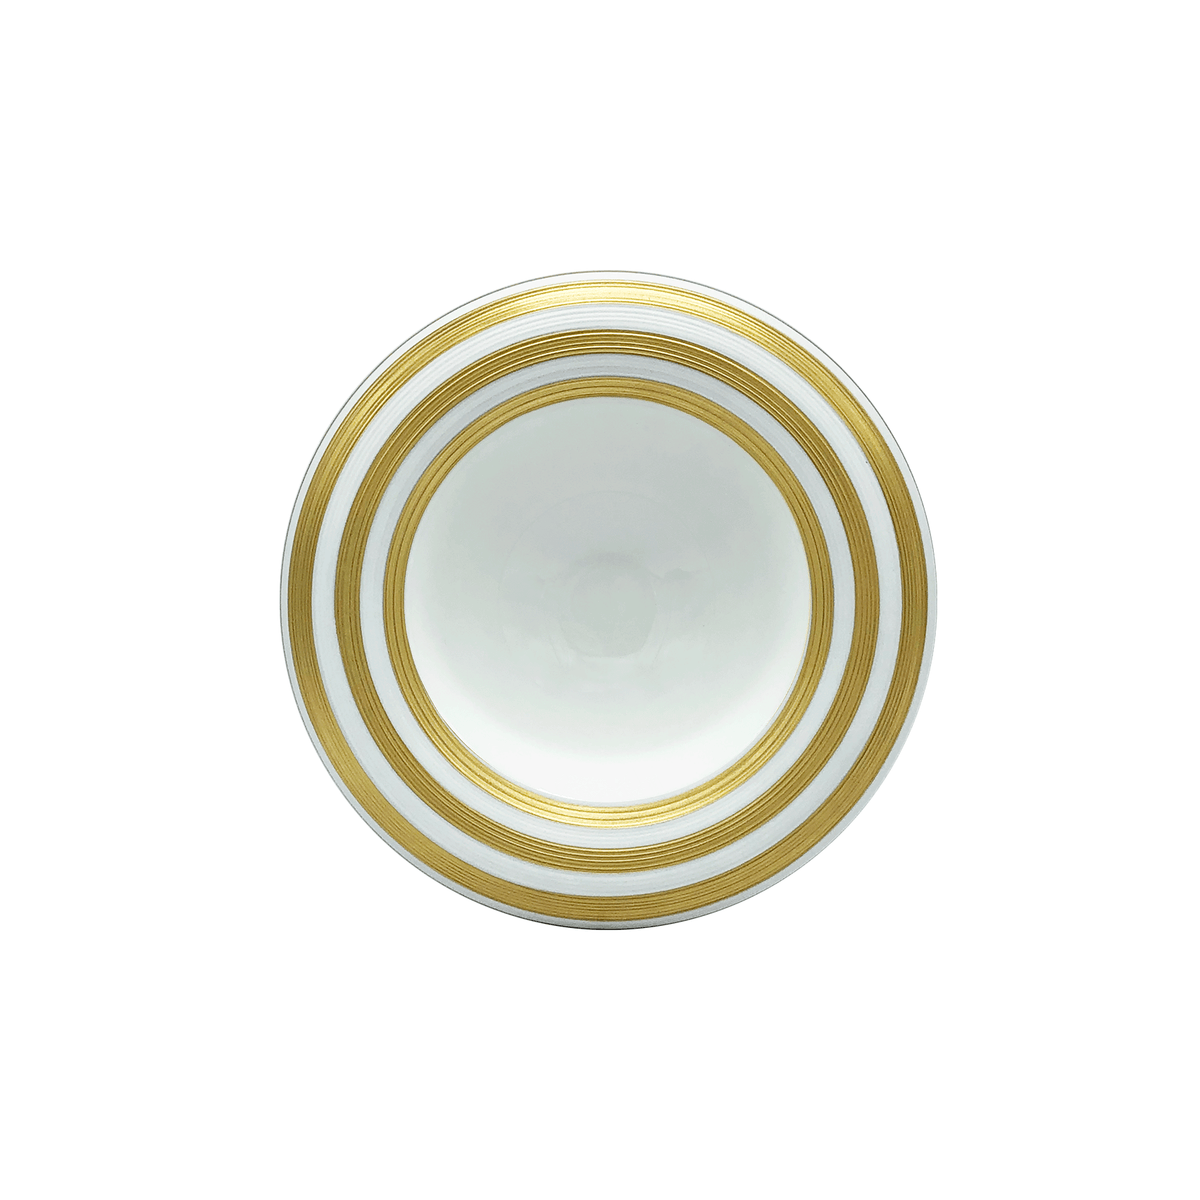 HEMISPHERE Gold stripes - Bubble 7 cm